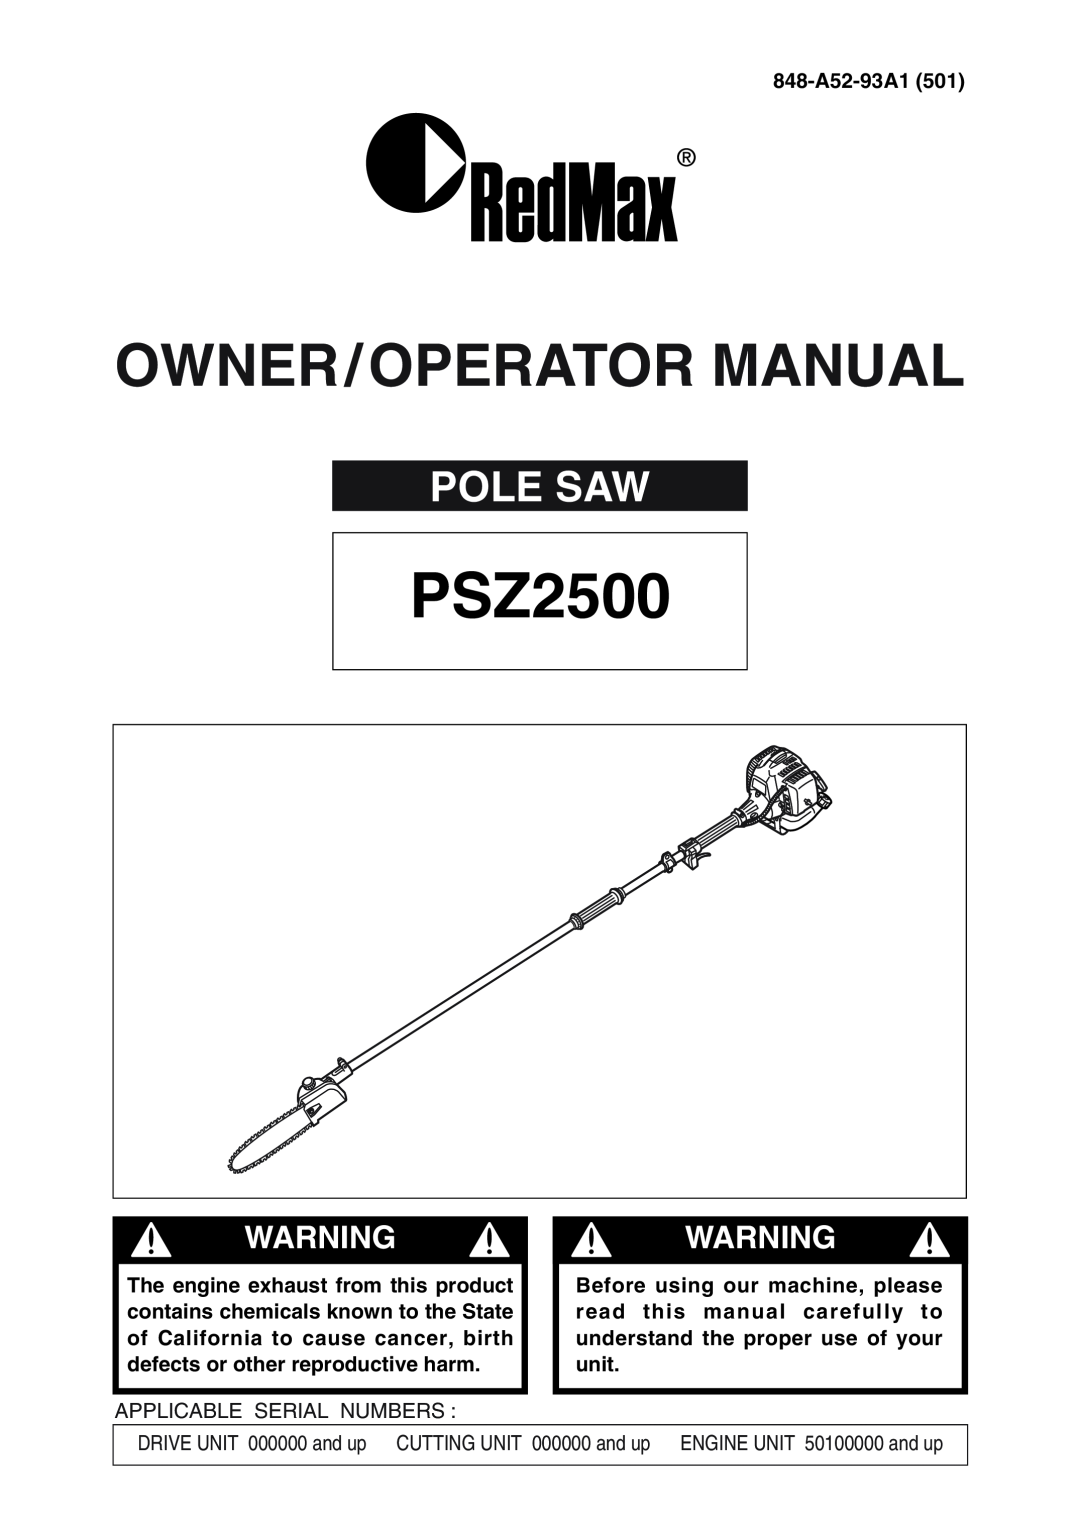 Zenoah PSZ2500 manual Pole Saw, Owner/Operator Manual, Warningwarning 